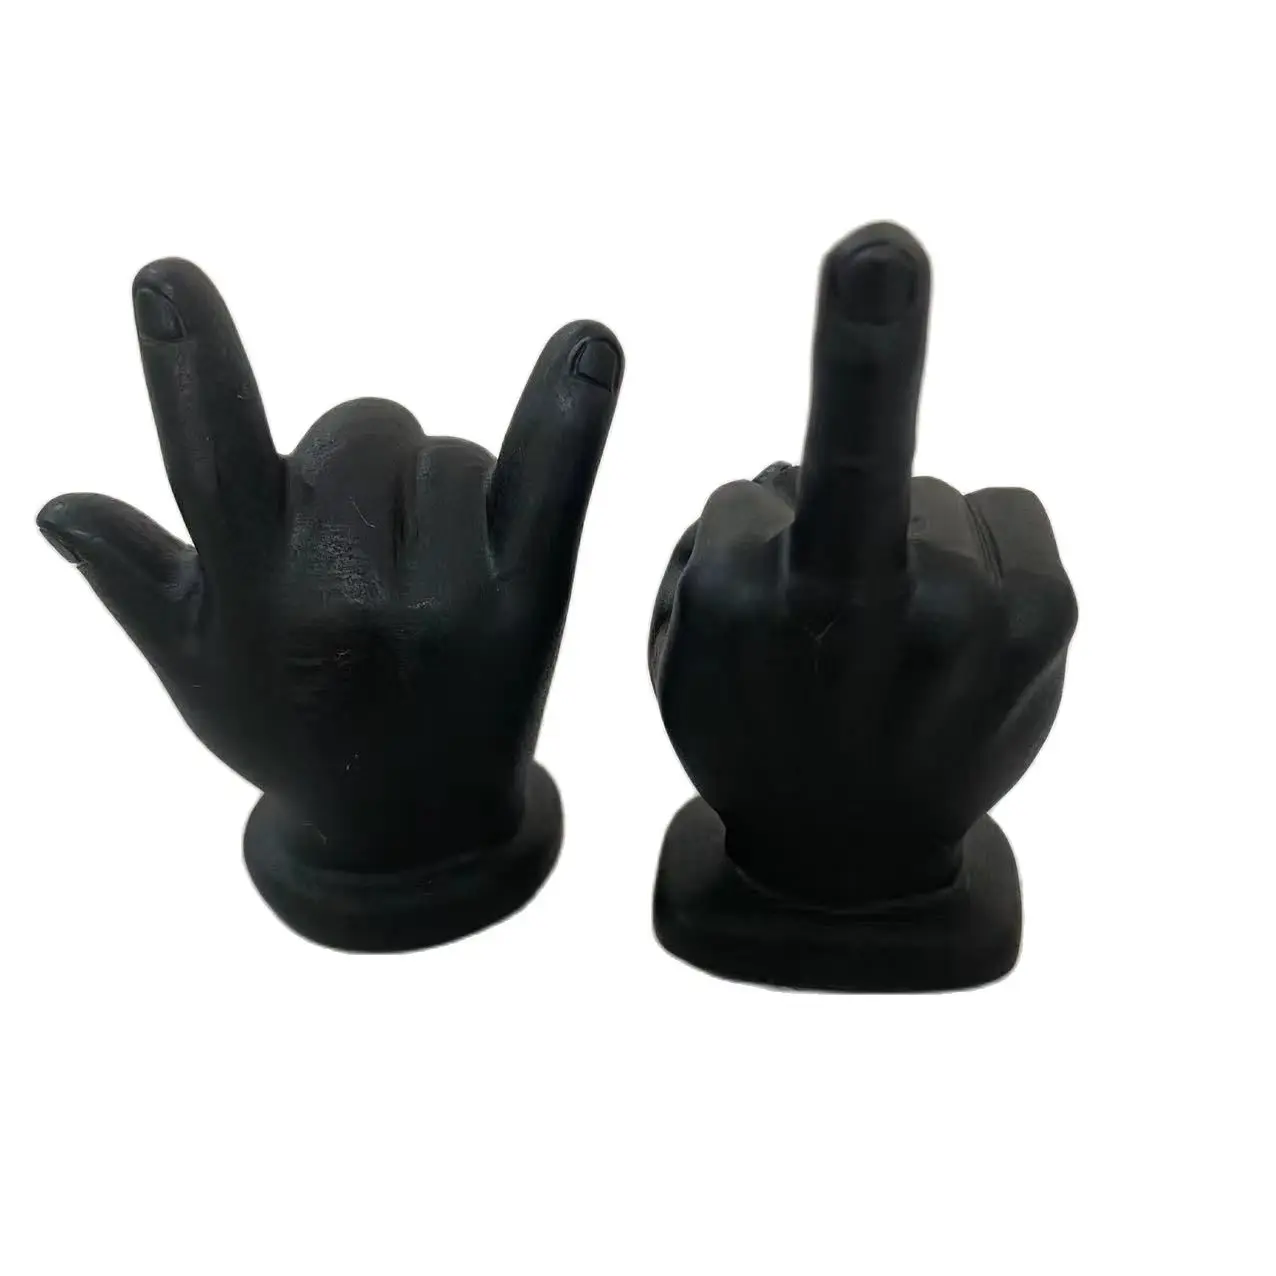 

1Pcs Natural Obsidian Quartz Decor Finger Gesture Desk Statues Hand Sculpture for Home Living Room Cabinet Shelf Figurines Home